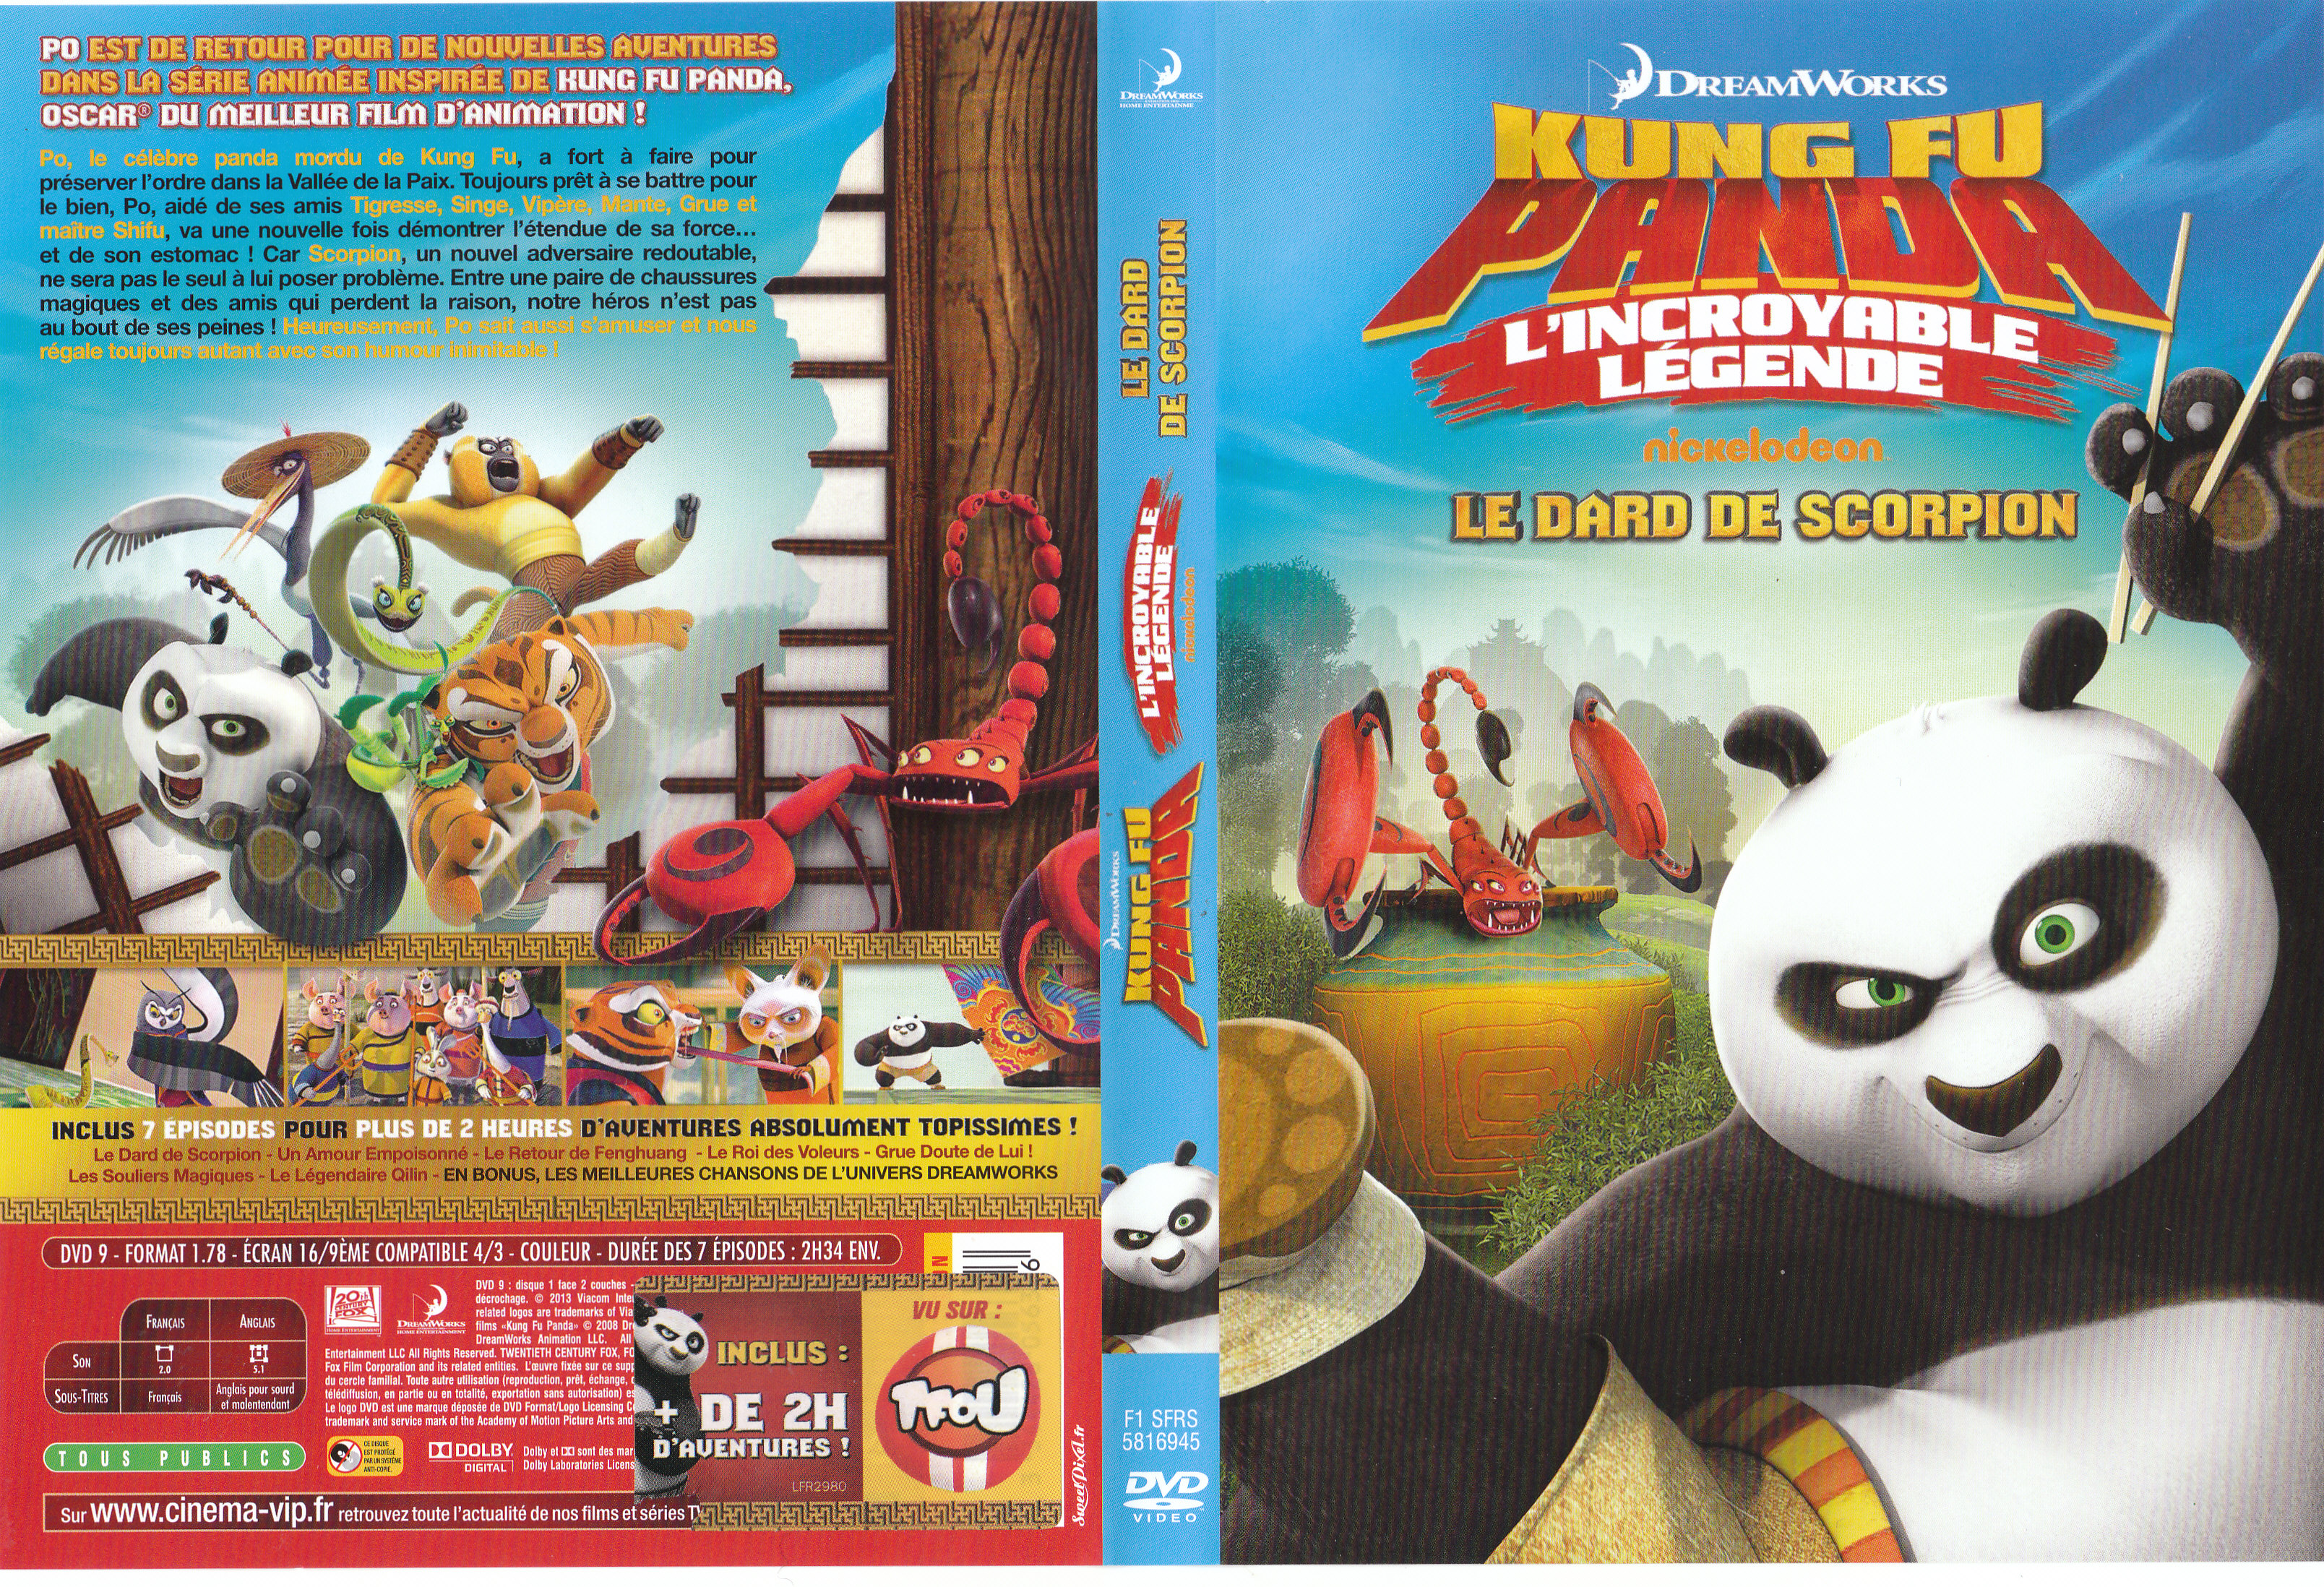 Jaquette DVD Kung fu panda L